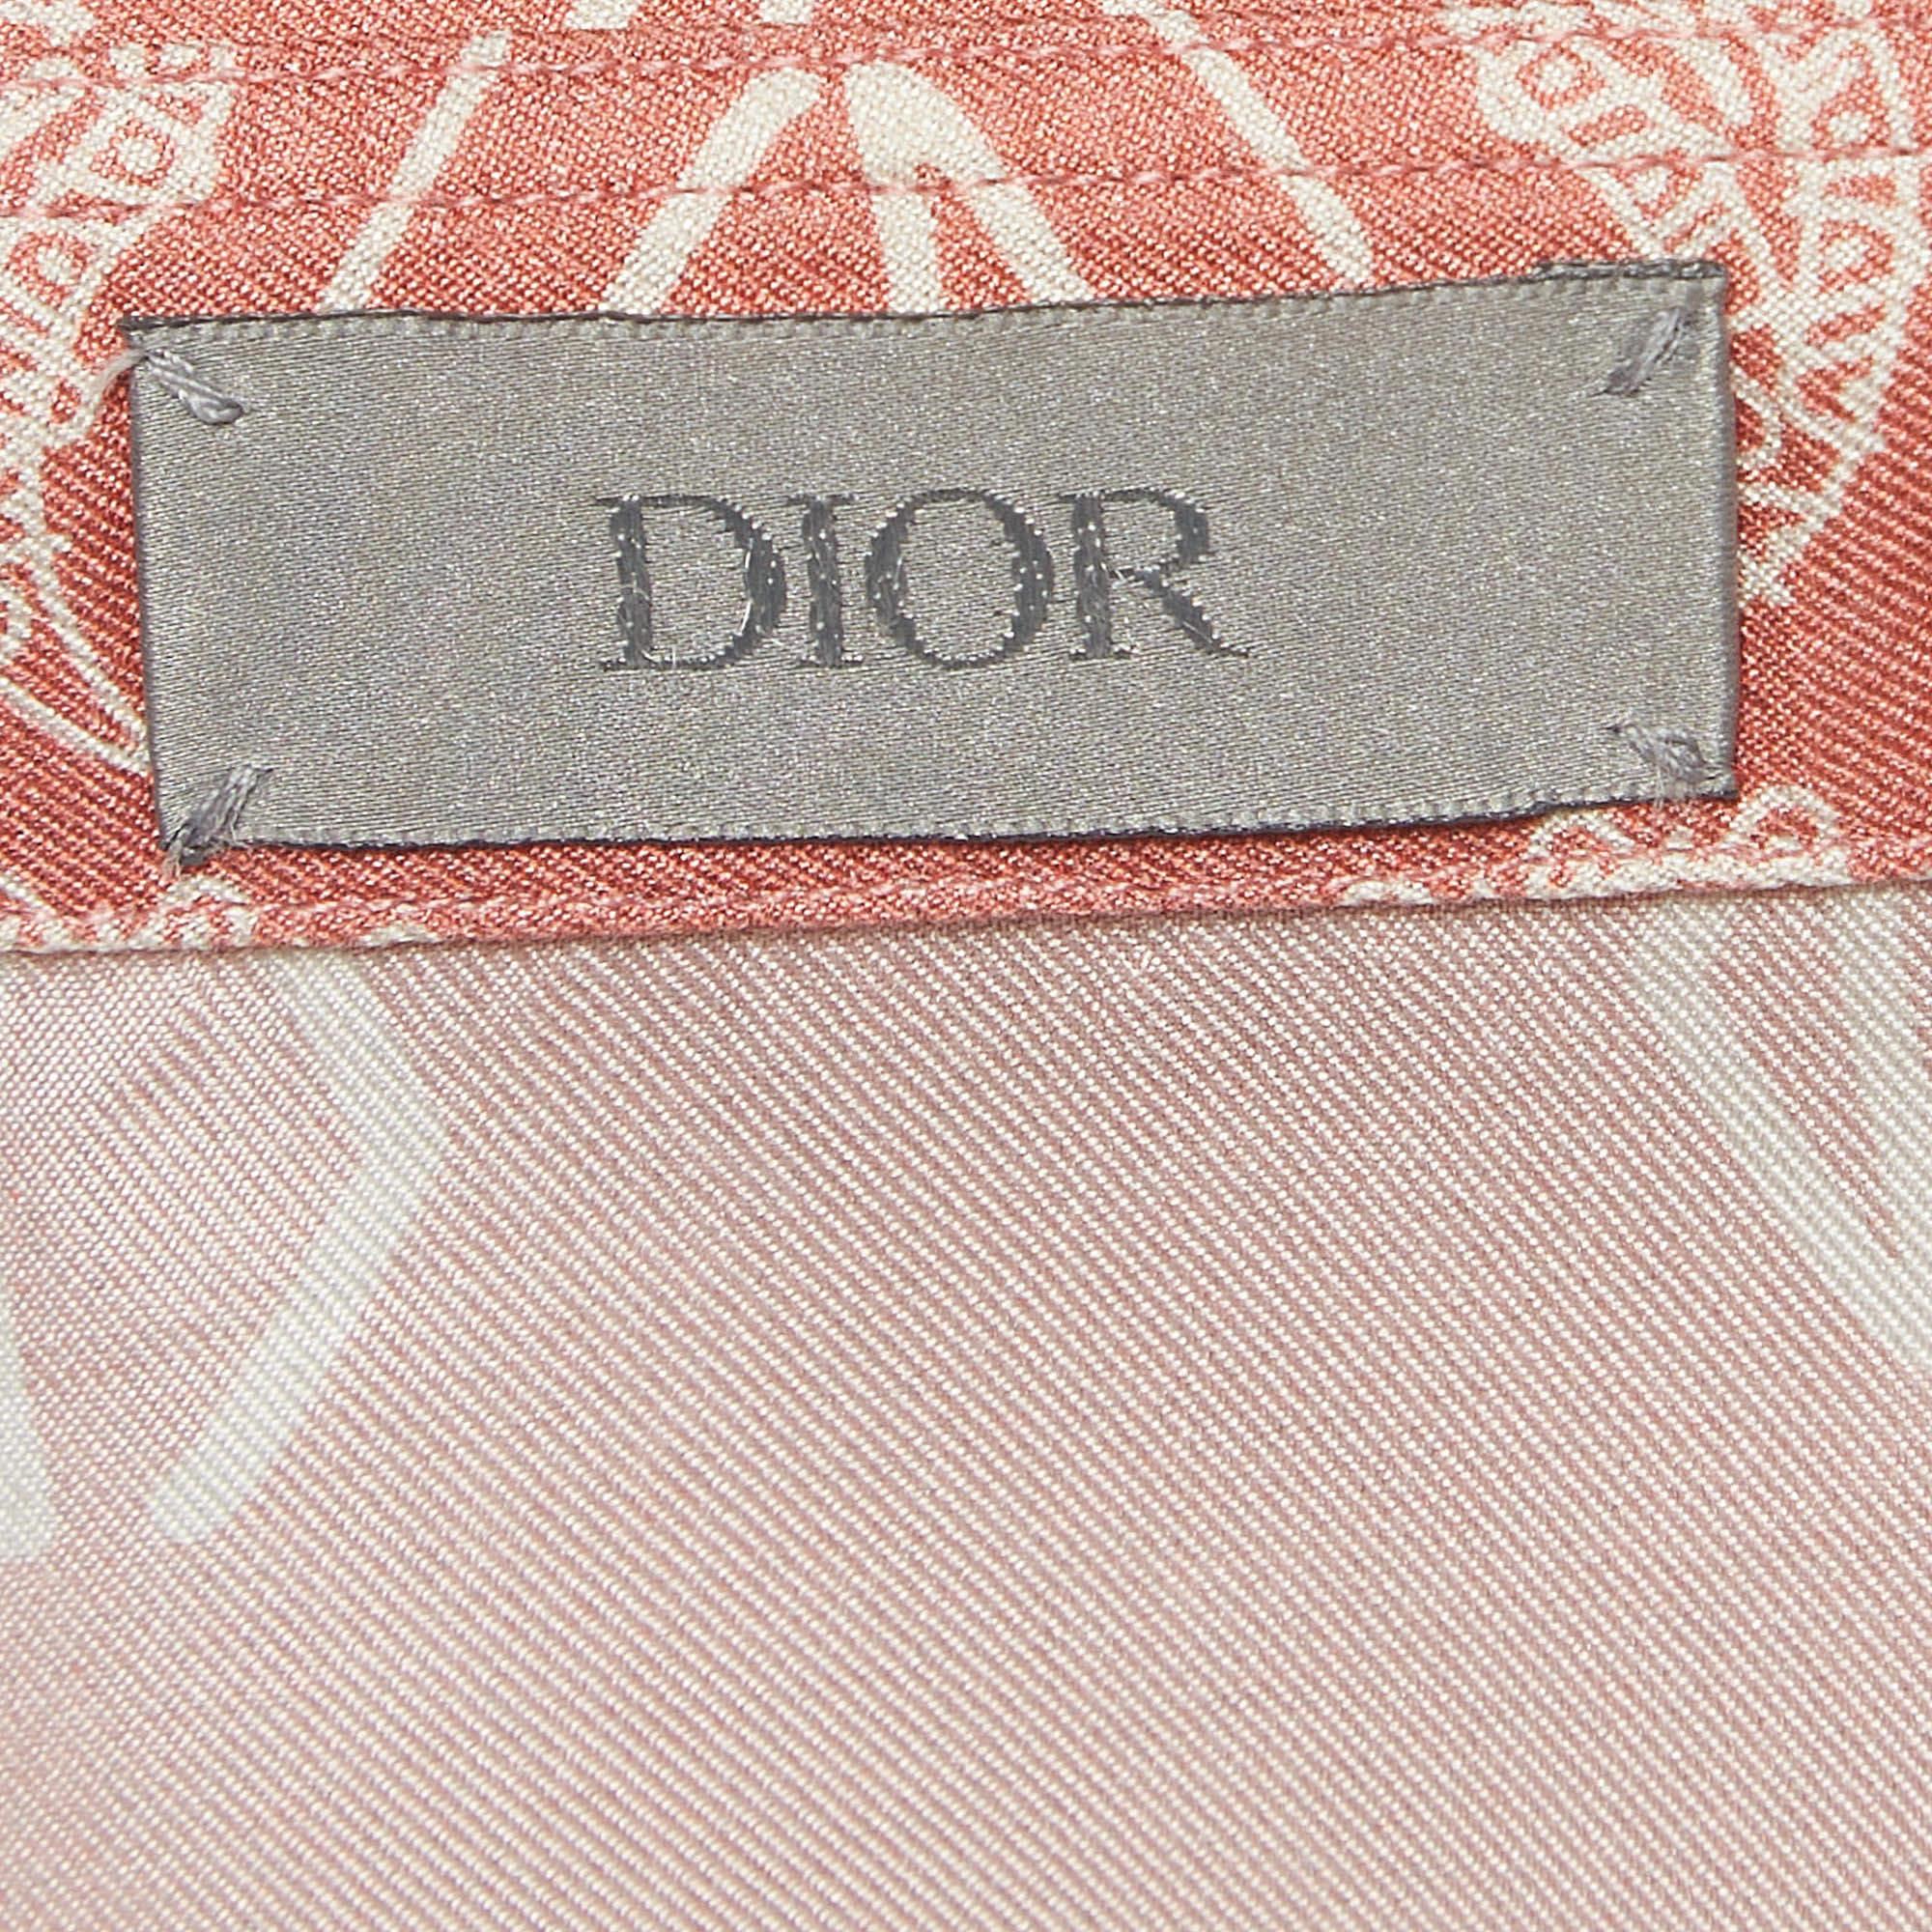 Dior Homme Pink Bandana Motif Print Silk Buttoned Half Sleeve Shirt M In Good Condition For Sale In Dubai, Al Qouz 2